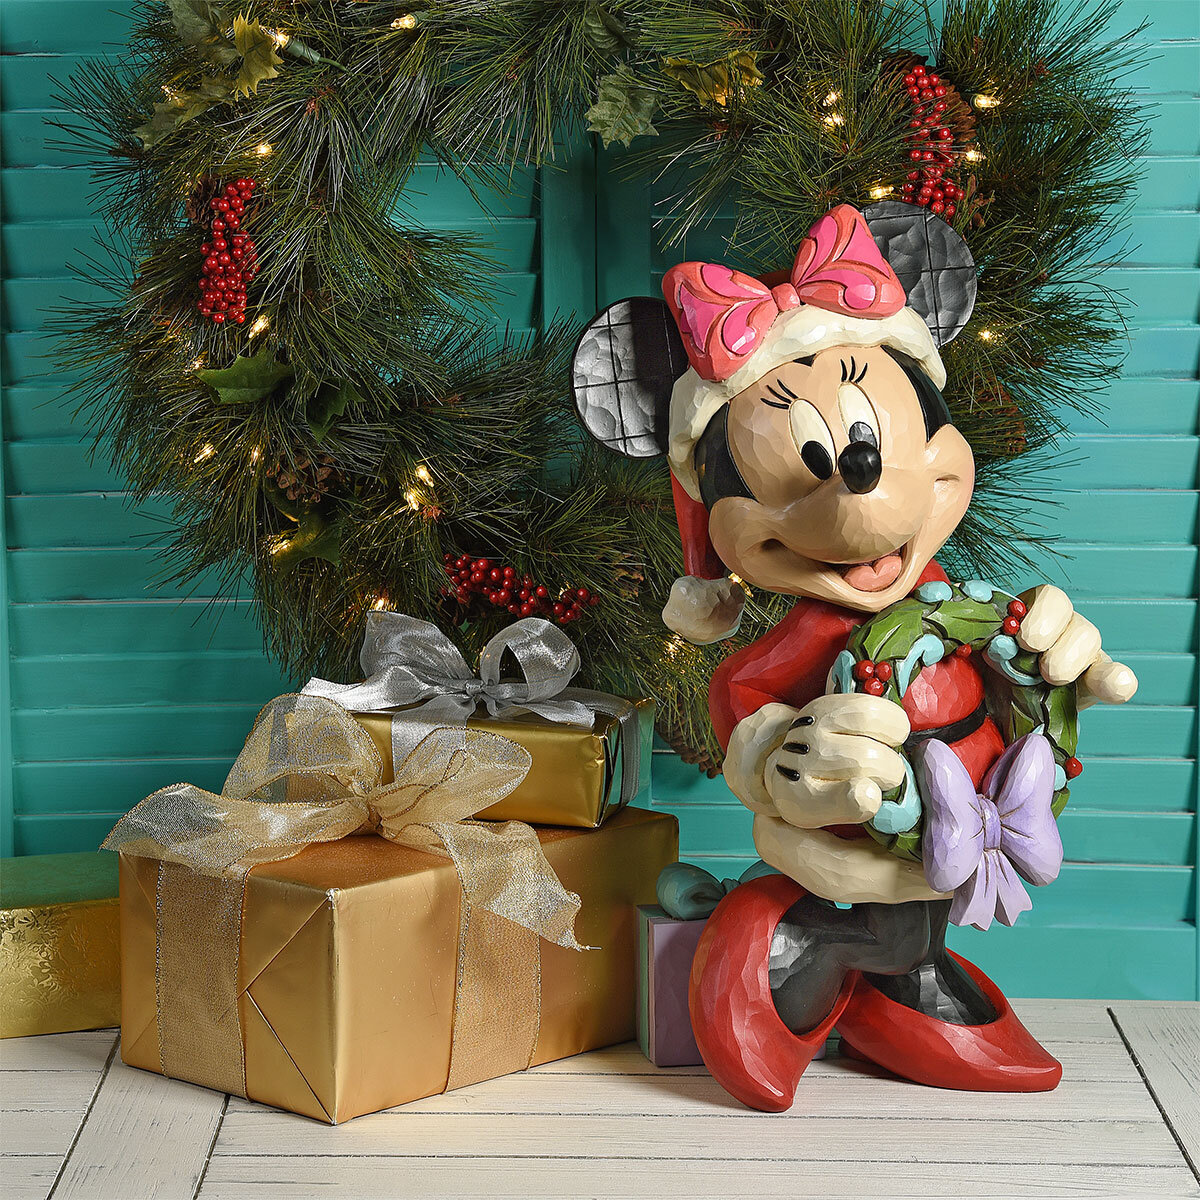 Buy Santa Mickey & Minnie Dimensions Image at Costco.co.uk